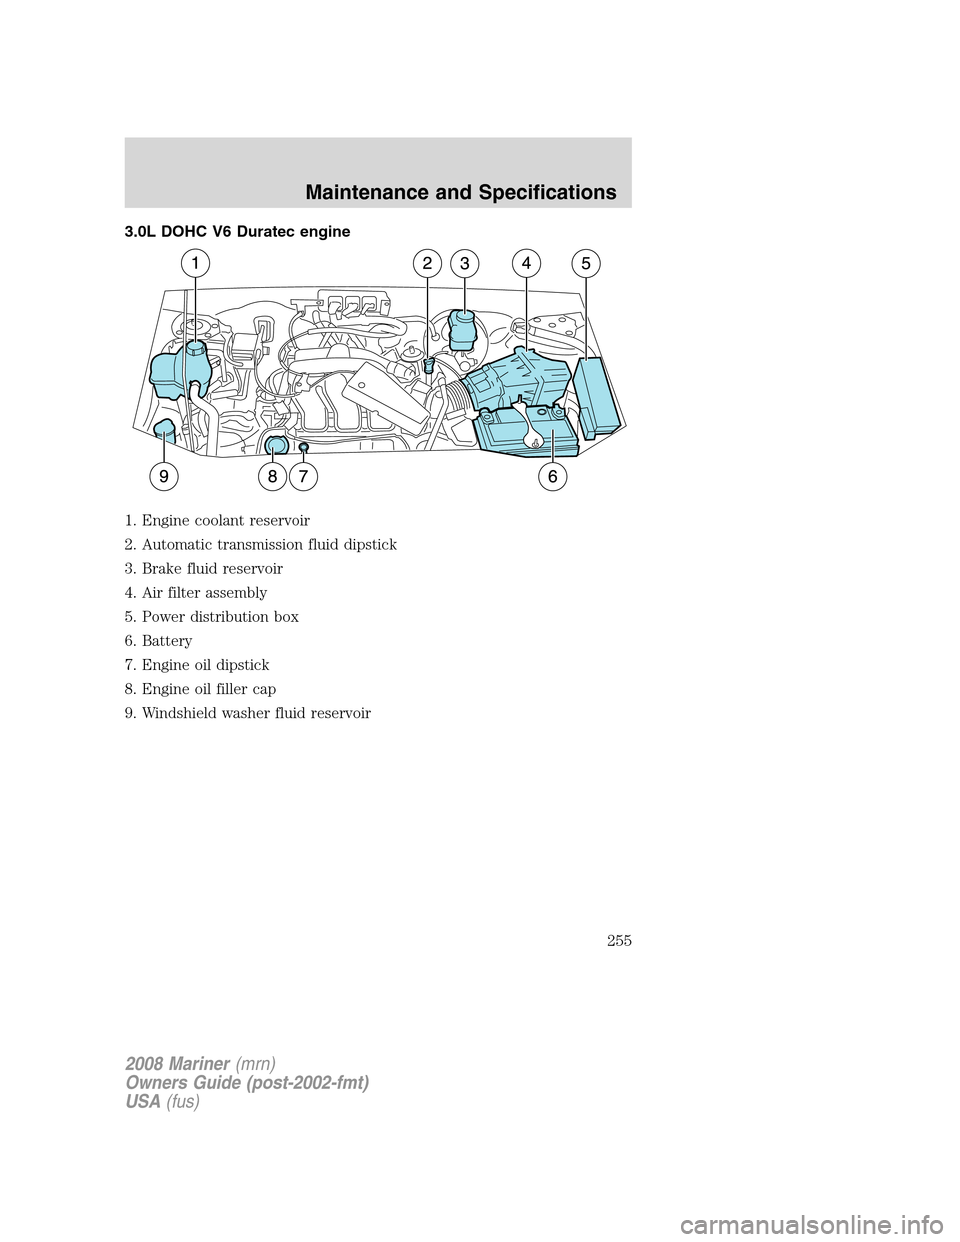 Mercury Mariner 2008  Owners Manuals 3.0L DOHC V6 Duratec engine
1. Engine coolant reservoir
2. Automatic transmission fluid dipstick
3. Brake fluid reservoir
4. Air filter assembly
5. Power distribution box
6. Battery
7. Engine oil dips